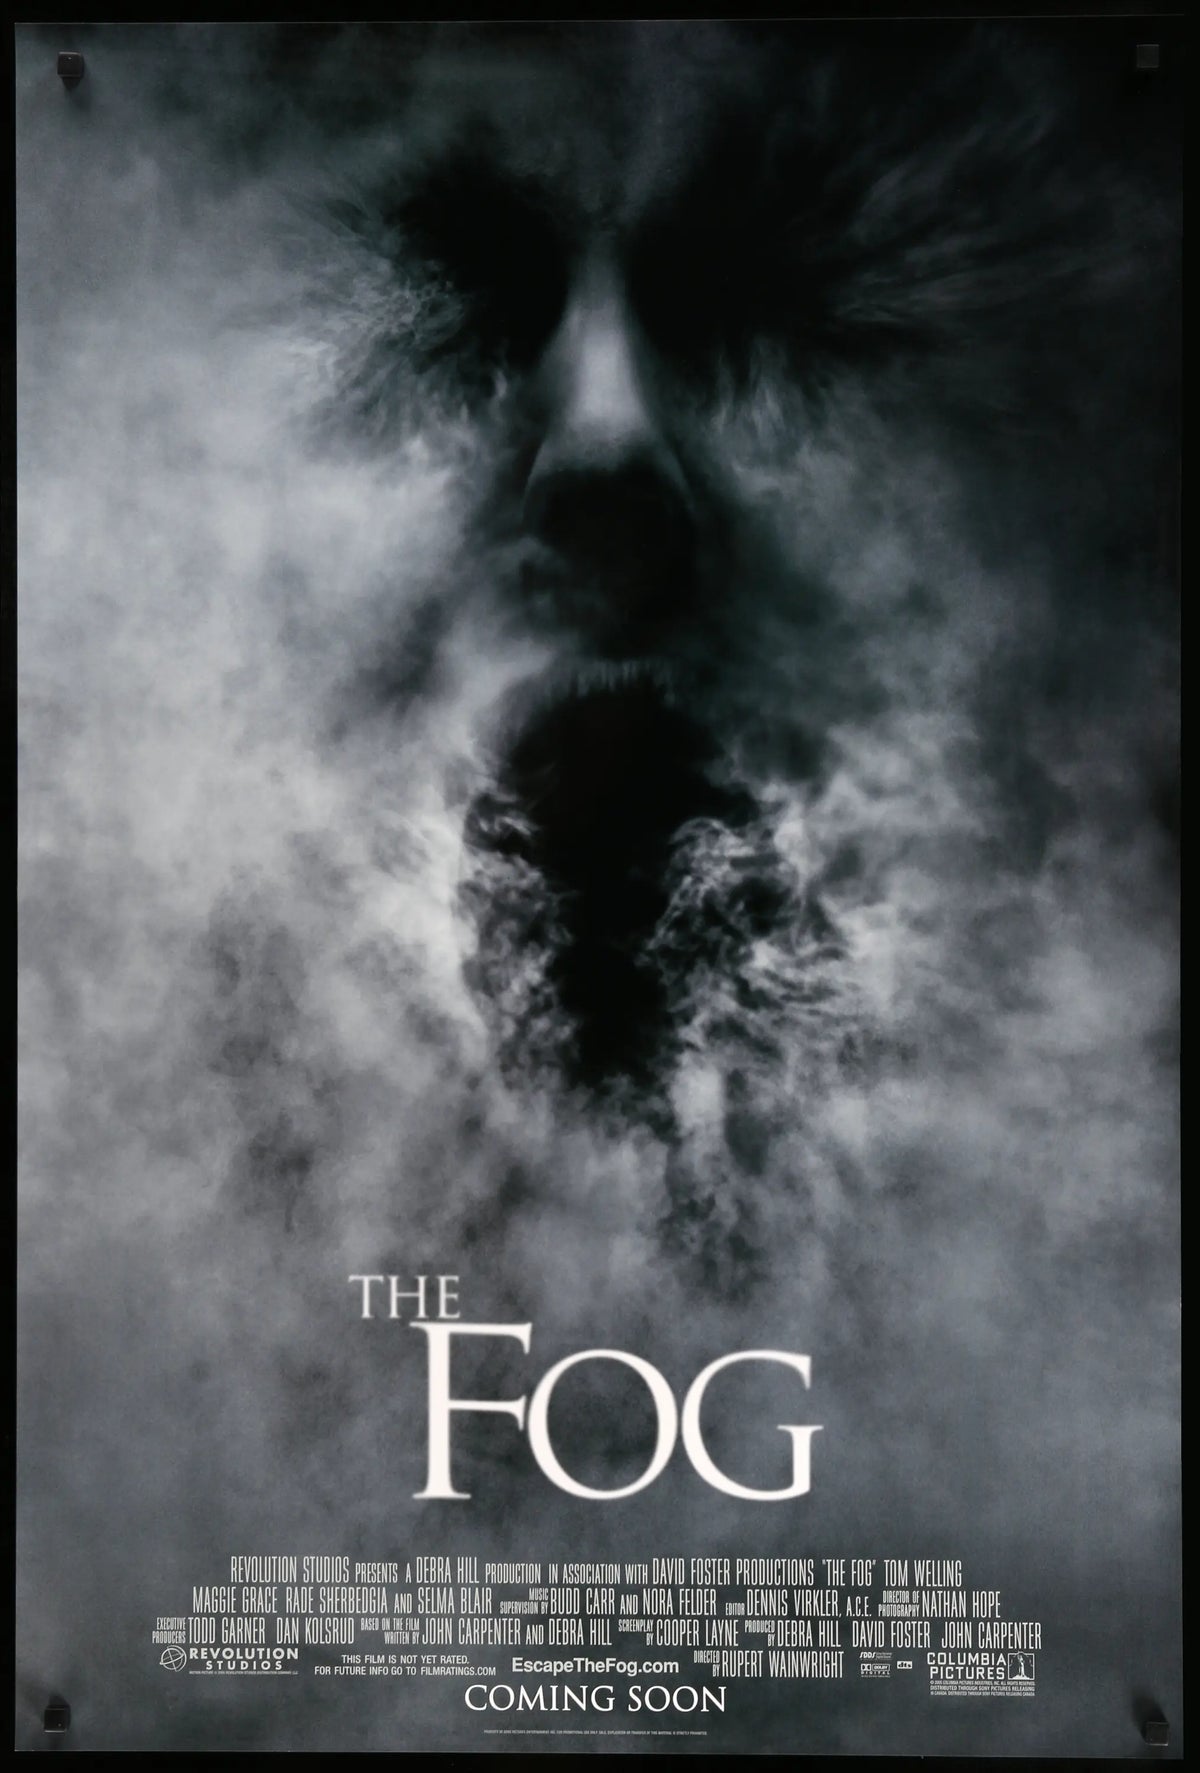 Fog (2005) original movie poster for sale at Original Film Art